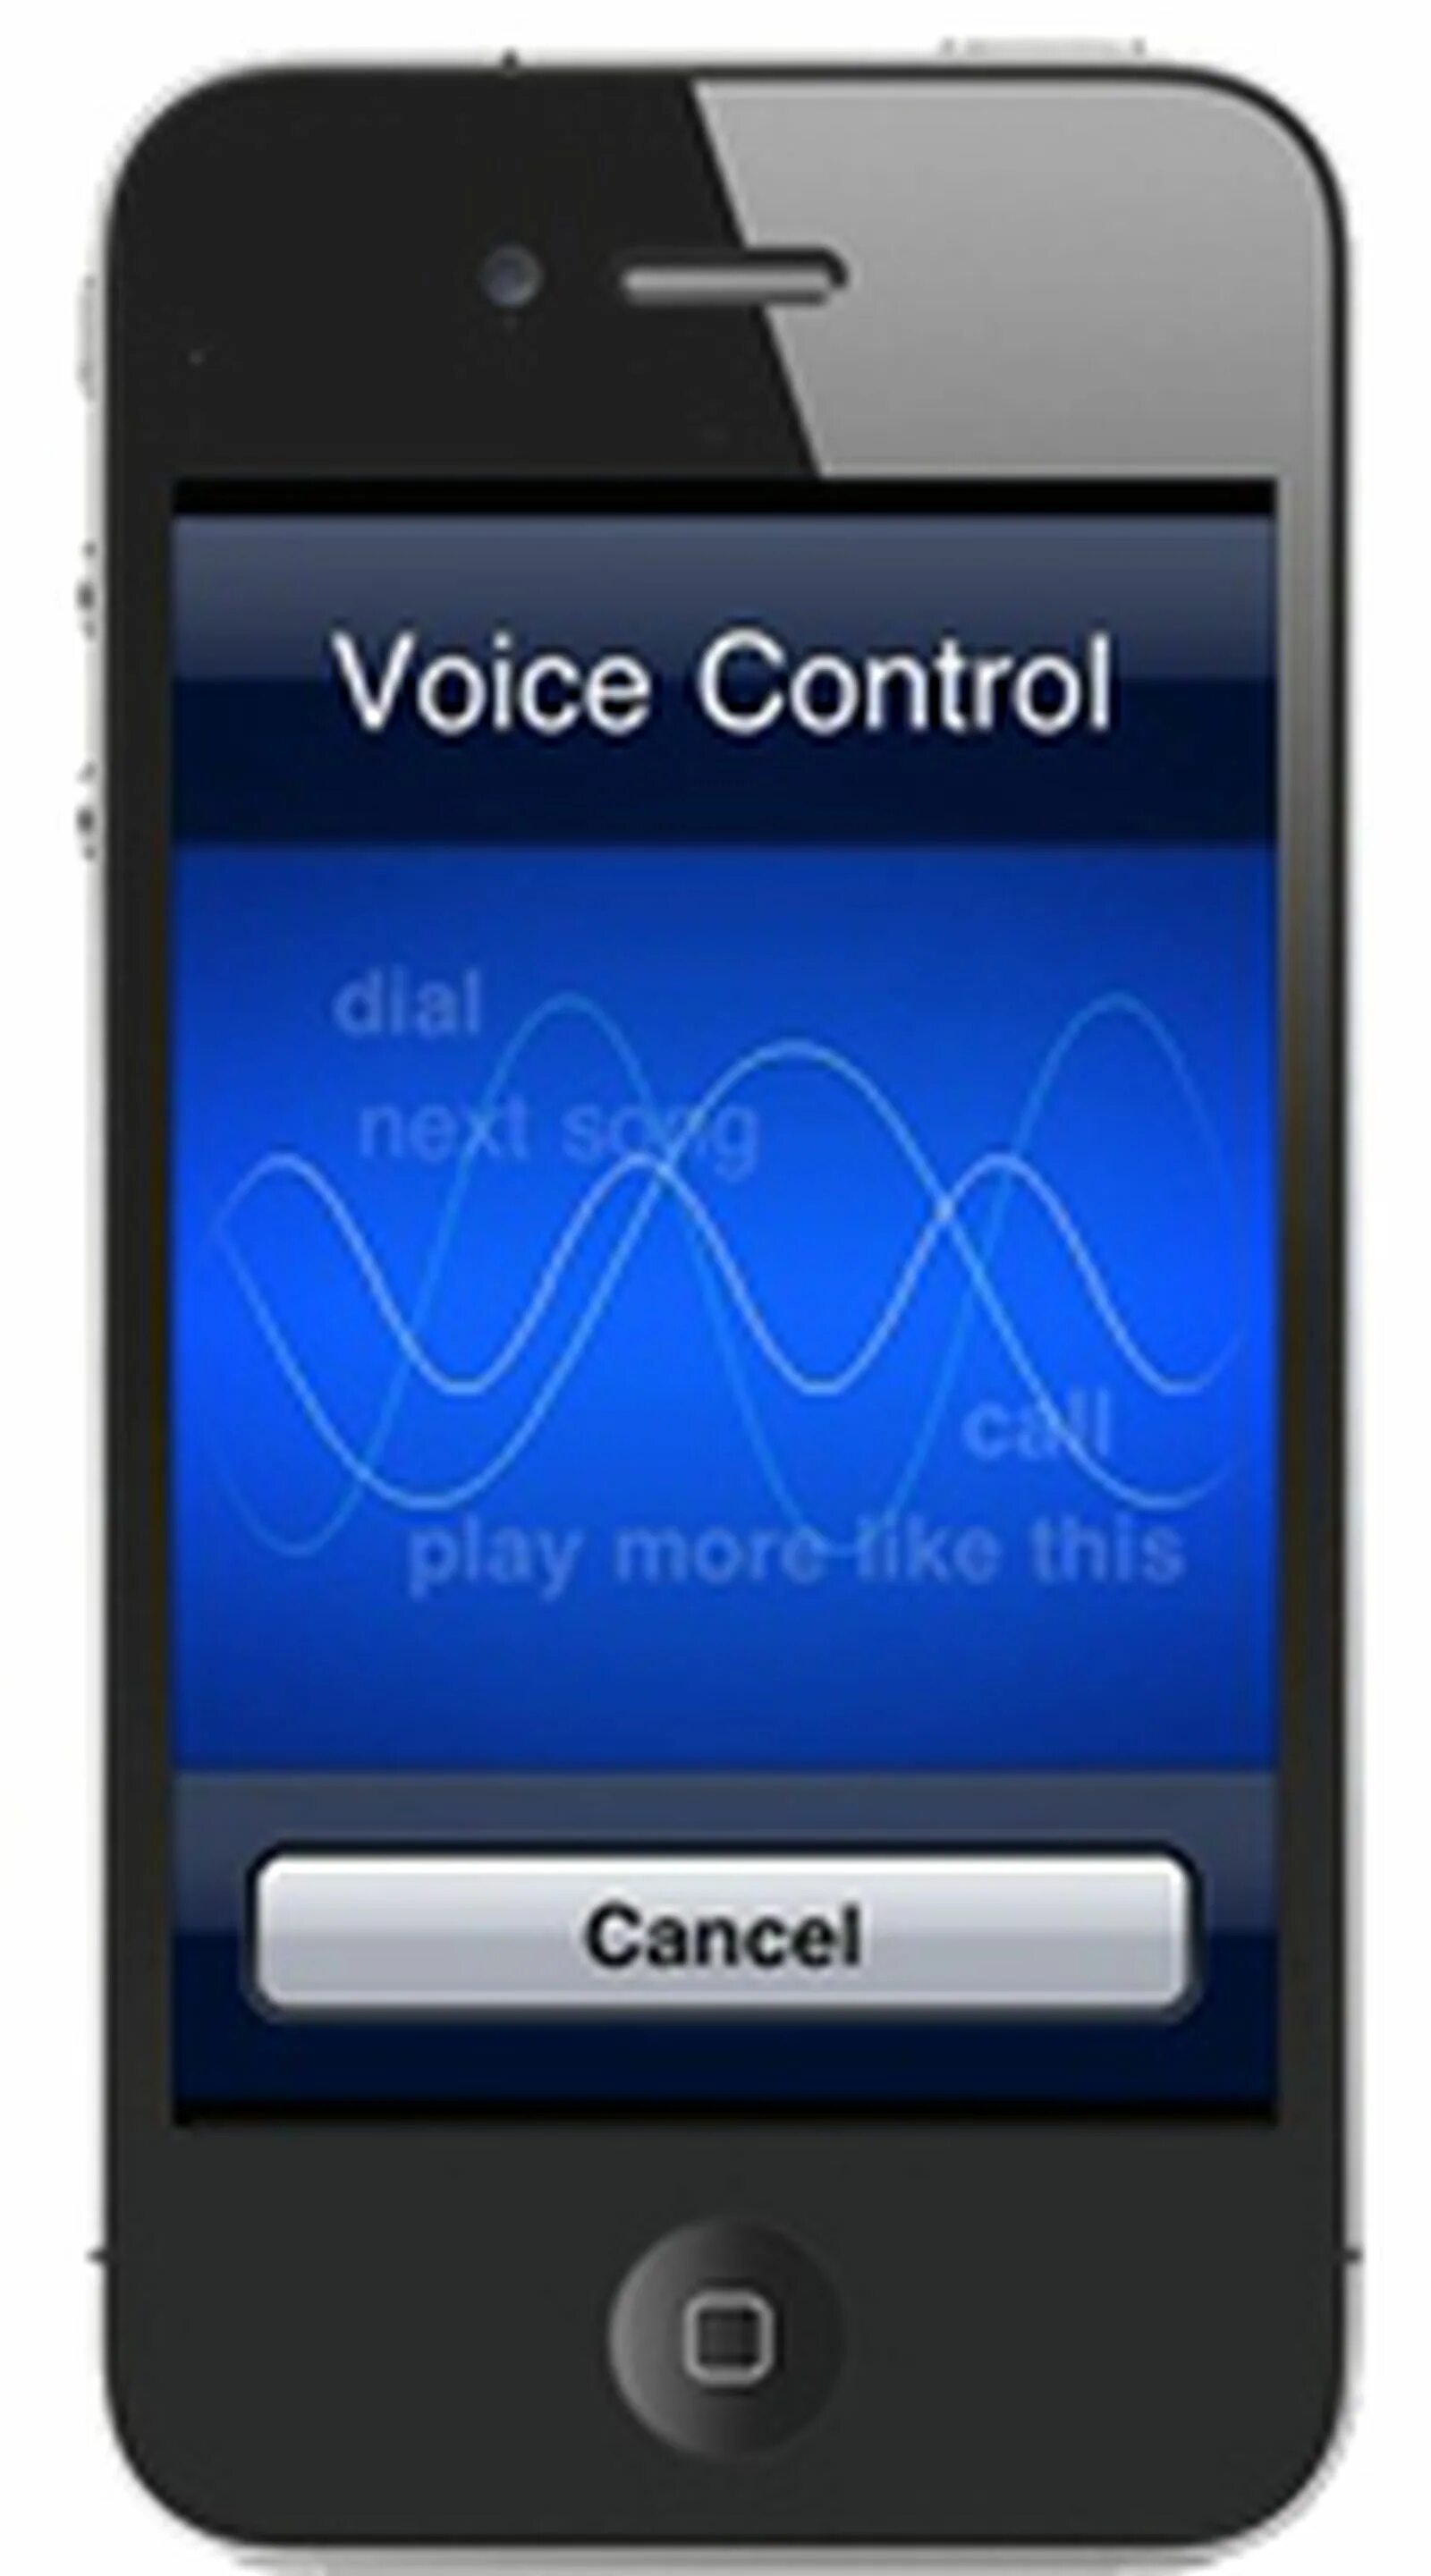 Iphone voice. Голосовое управление. Управление голосом. Управление голосом iphone. Voice Control.